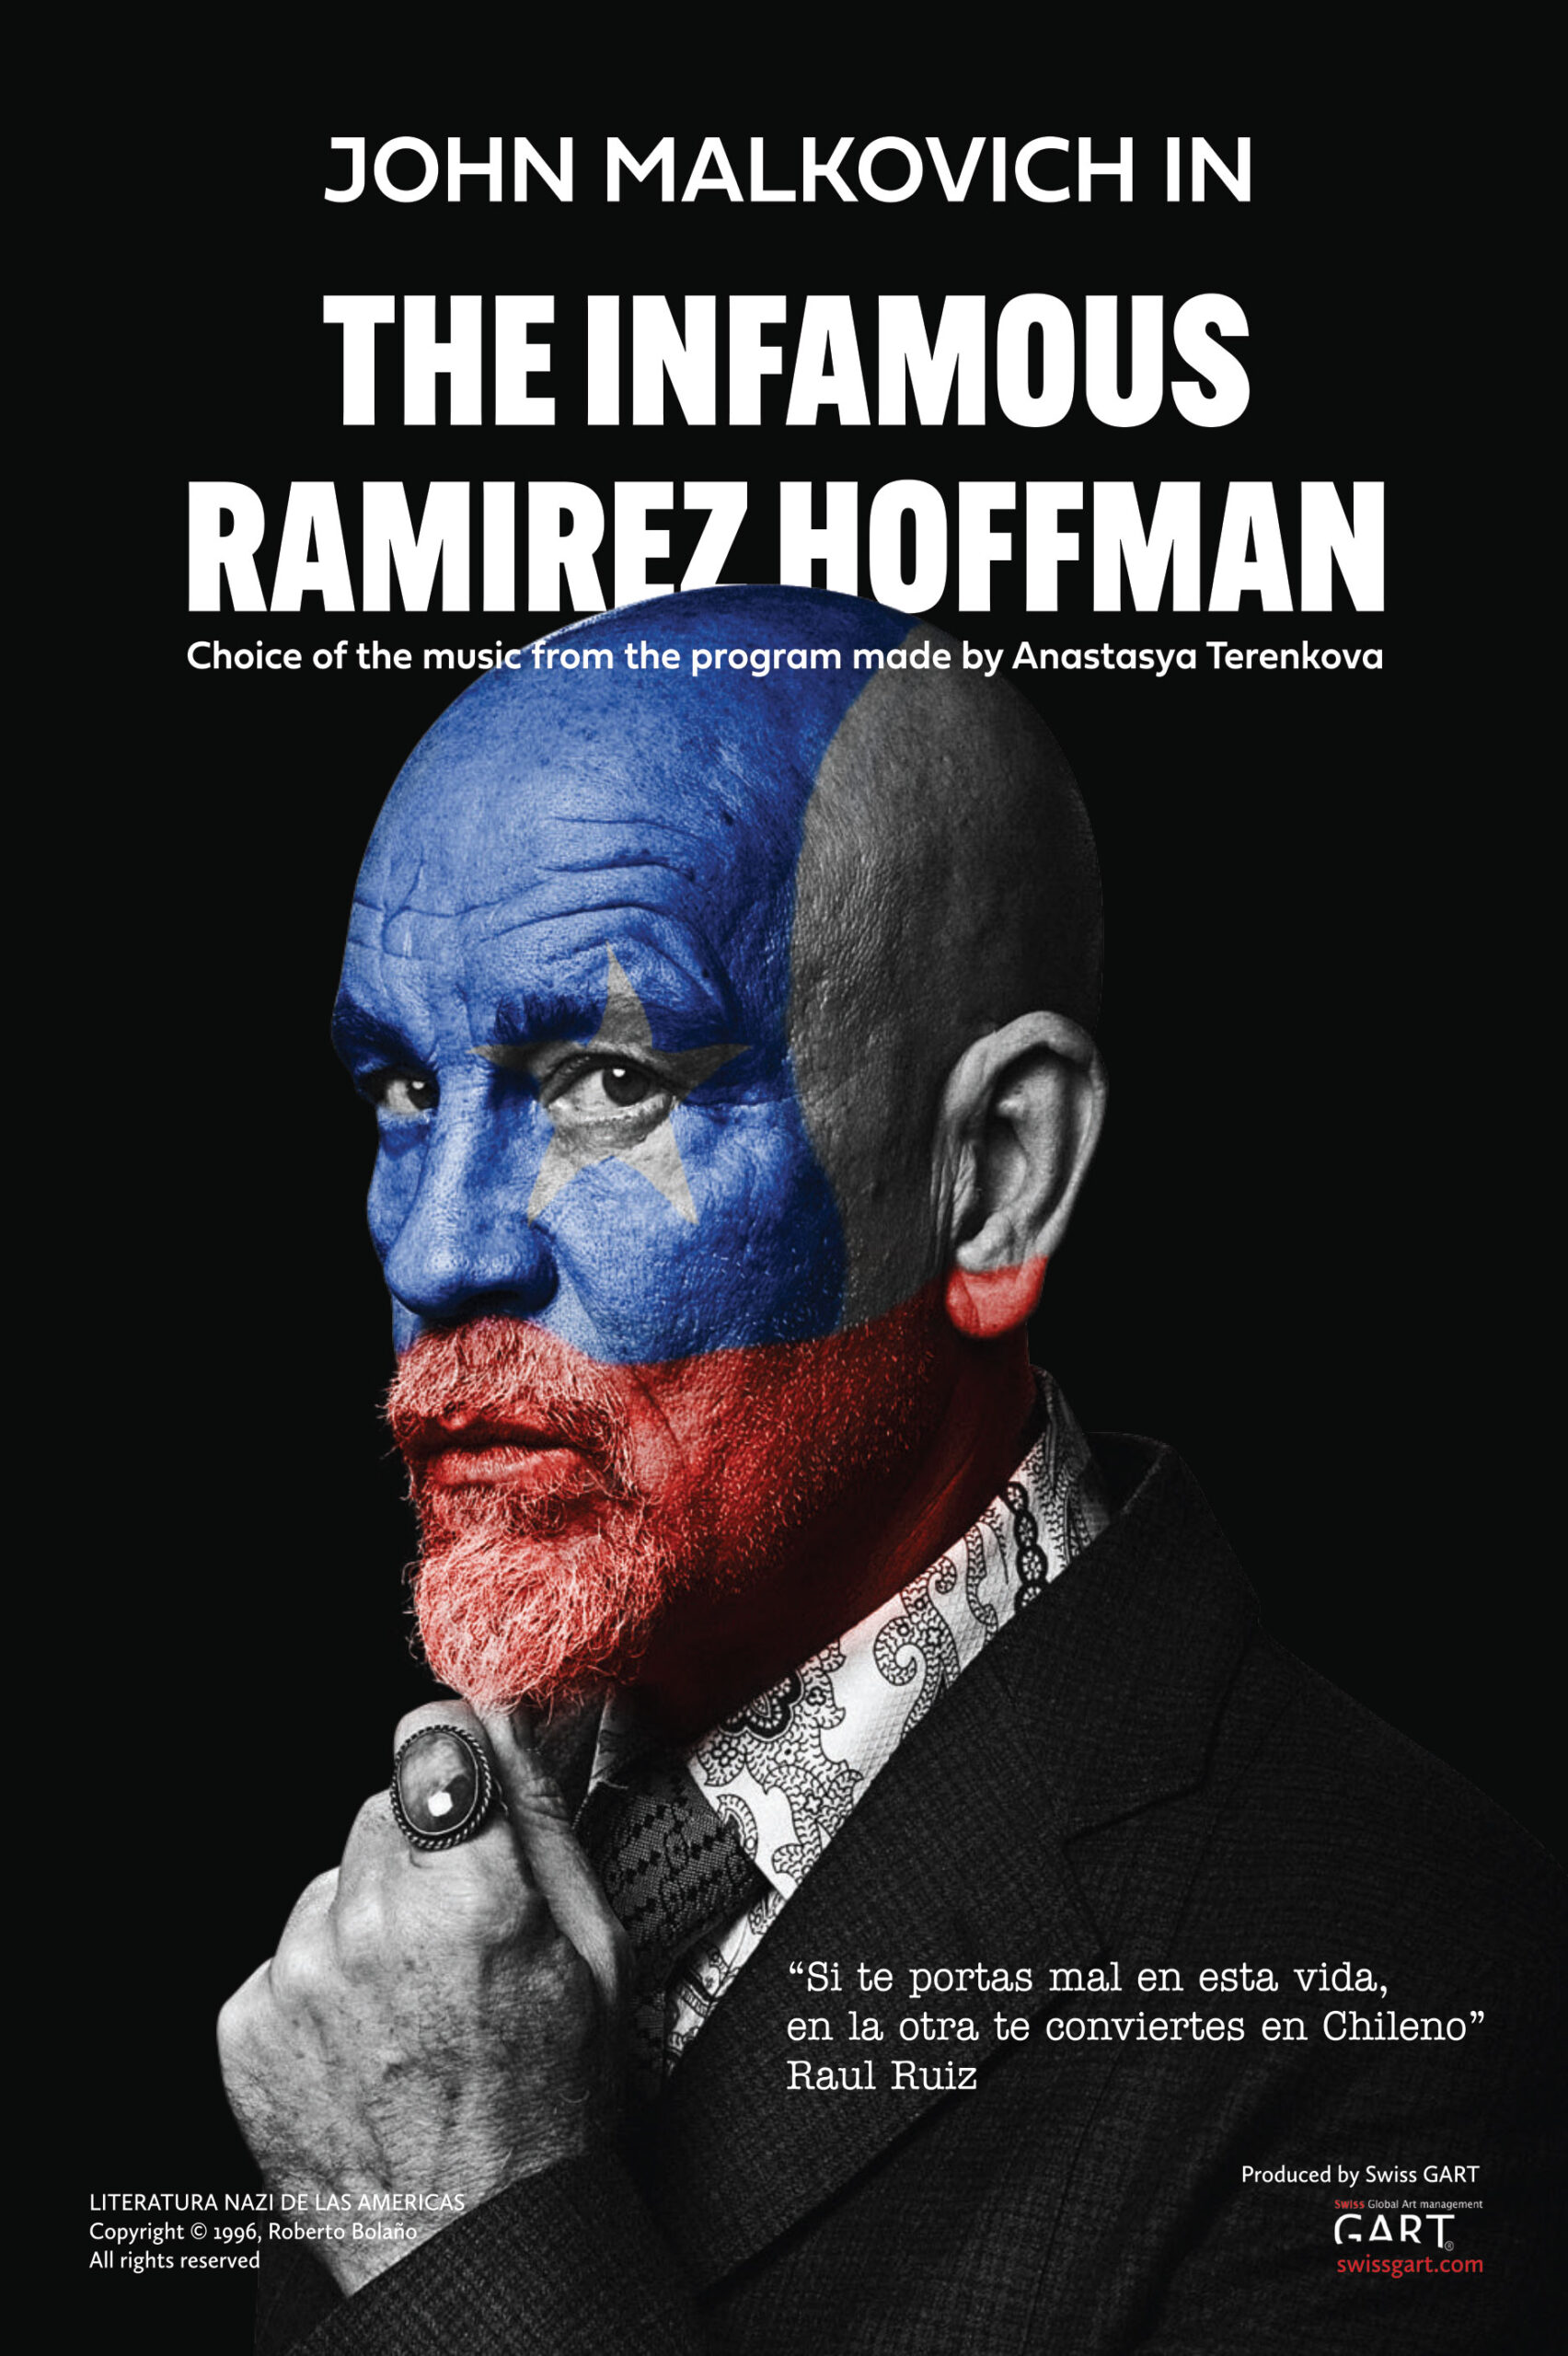 “The Infamous Ramirez Hoffman” with John Malkovich